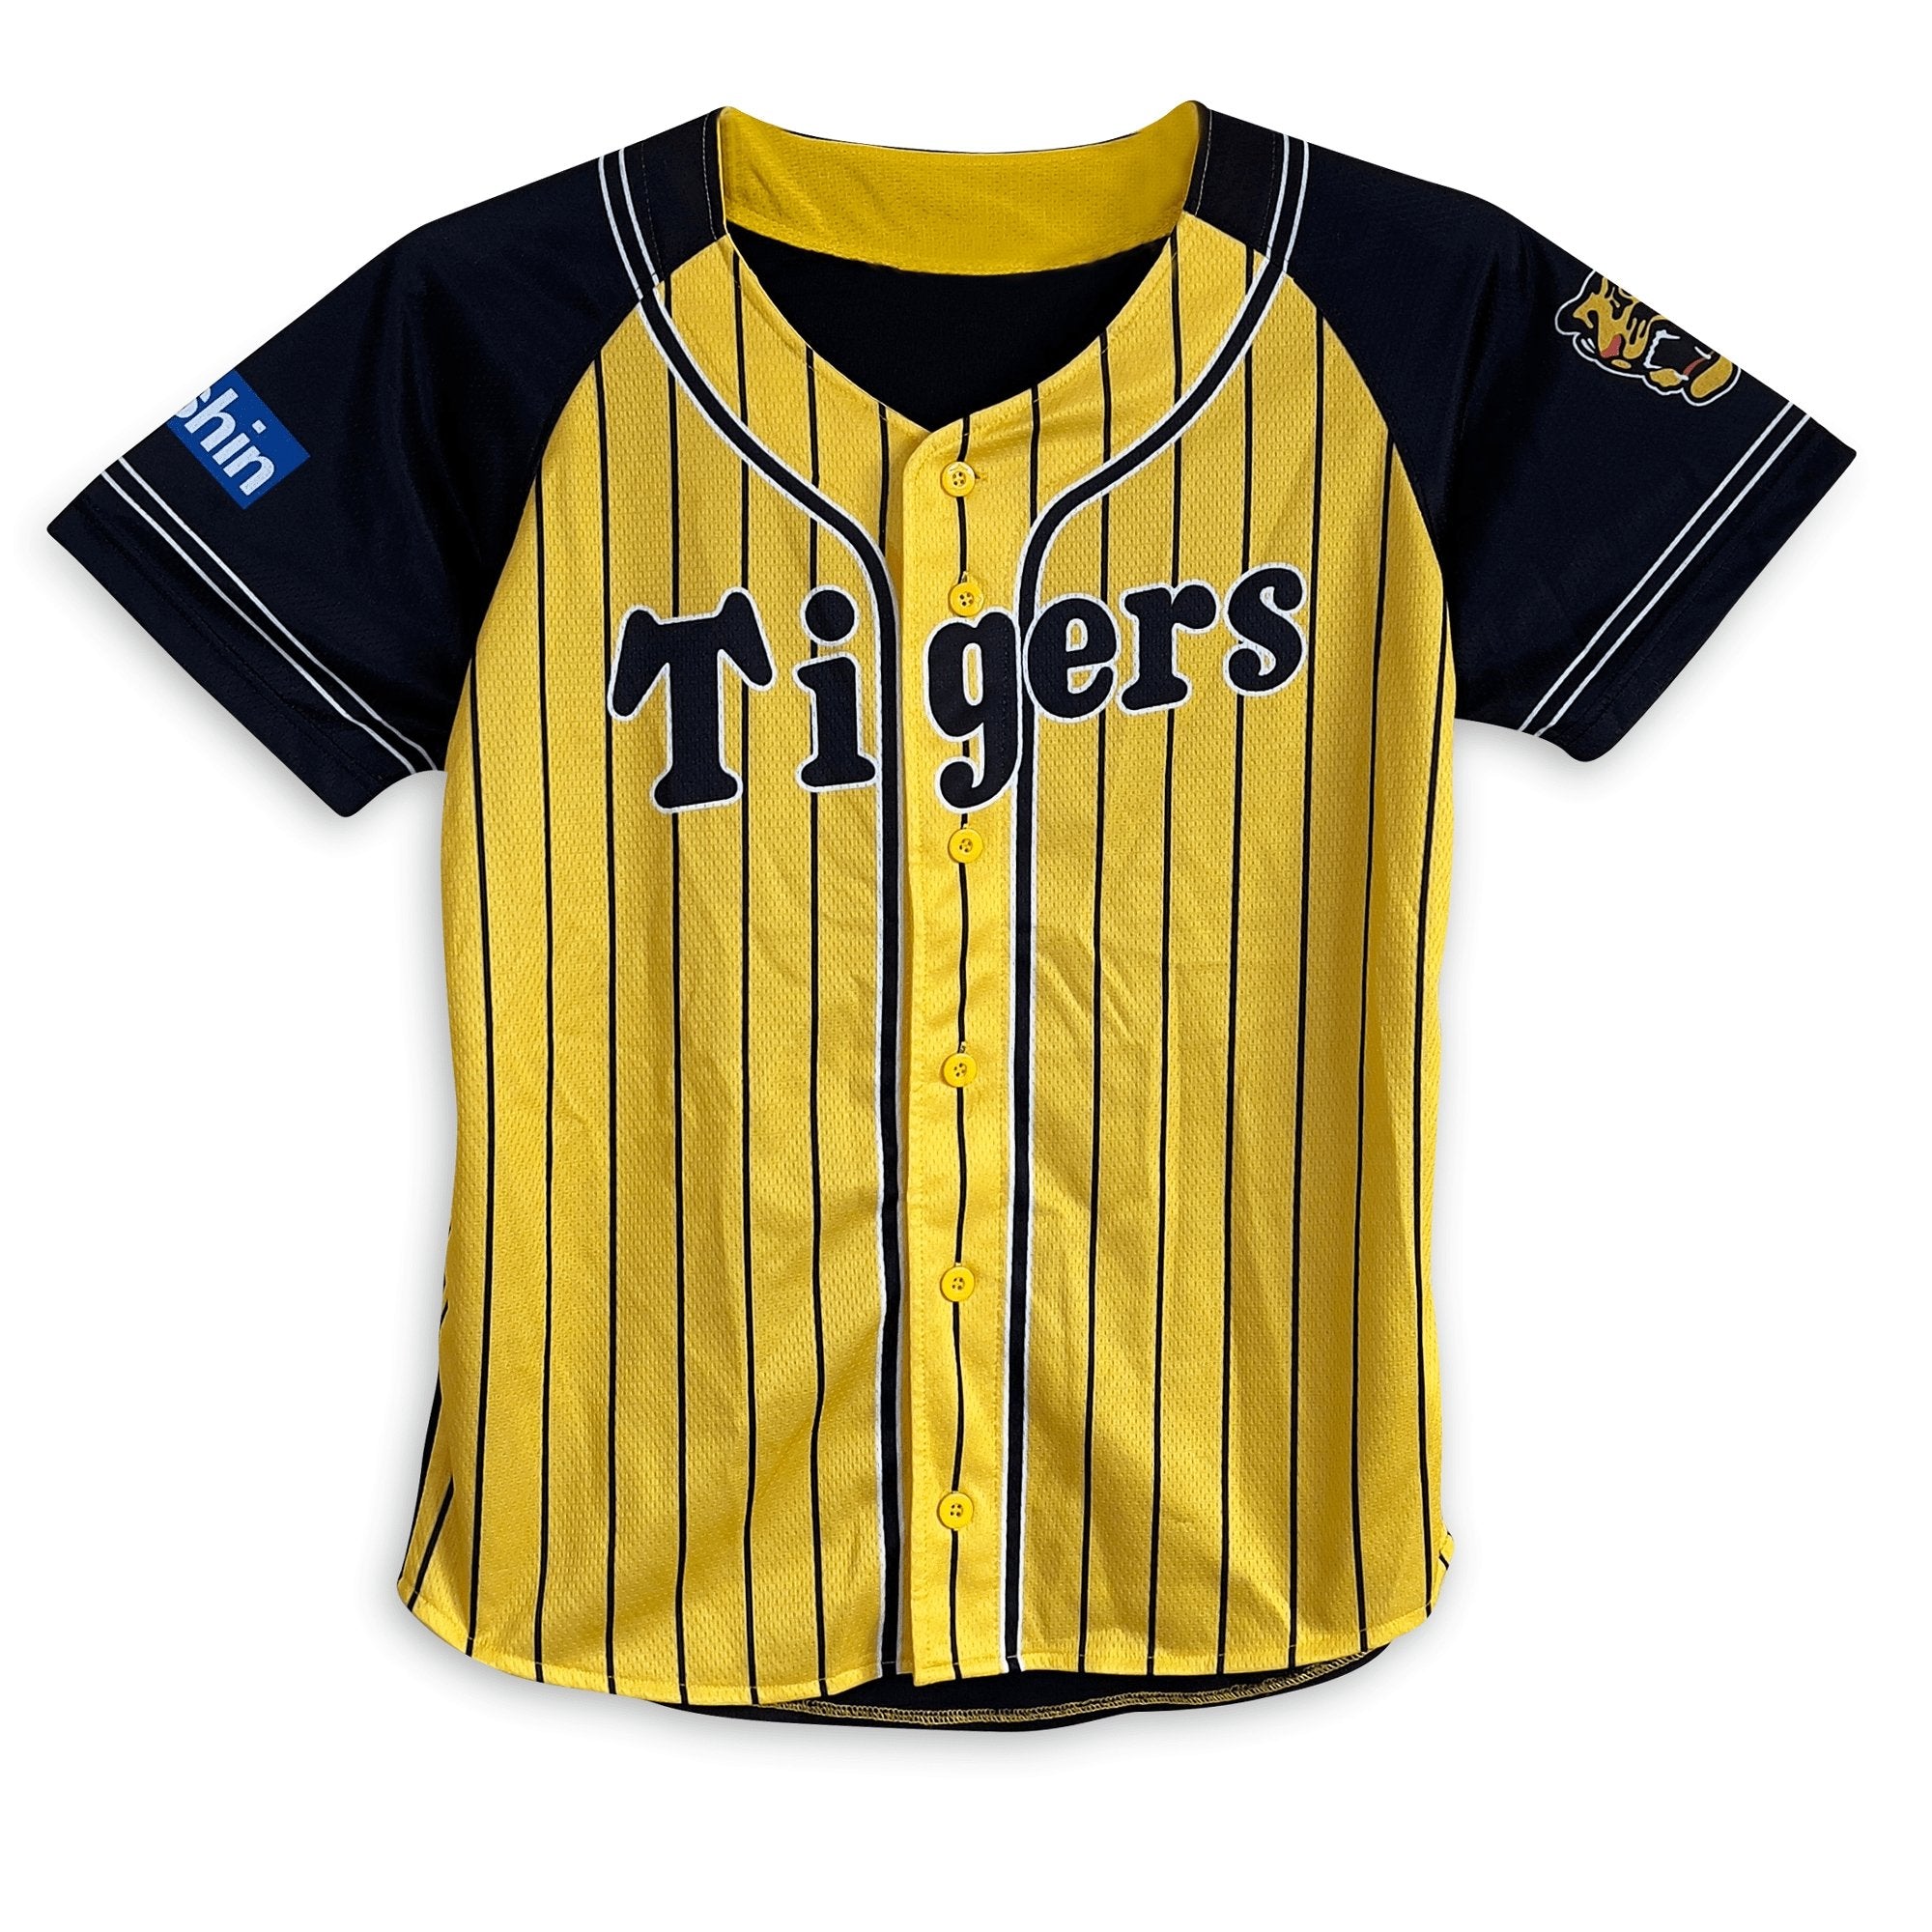 Tigers baseball uniform